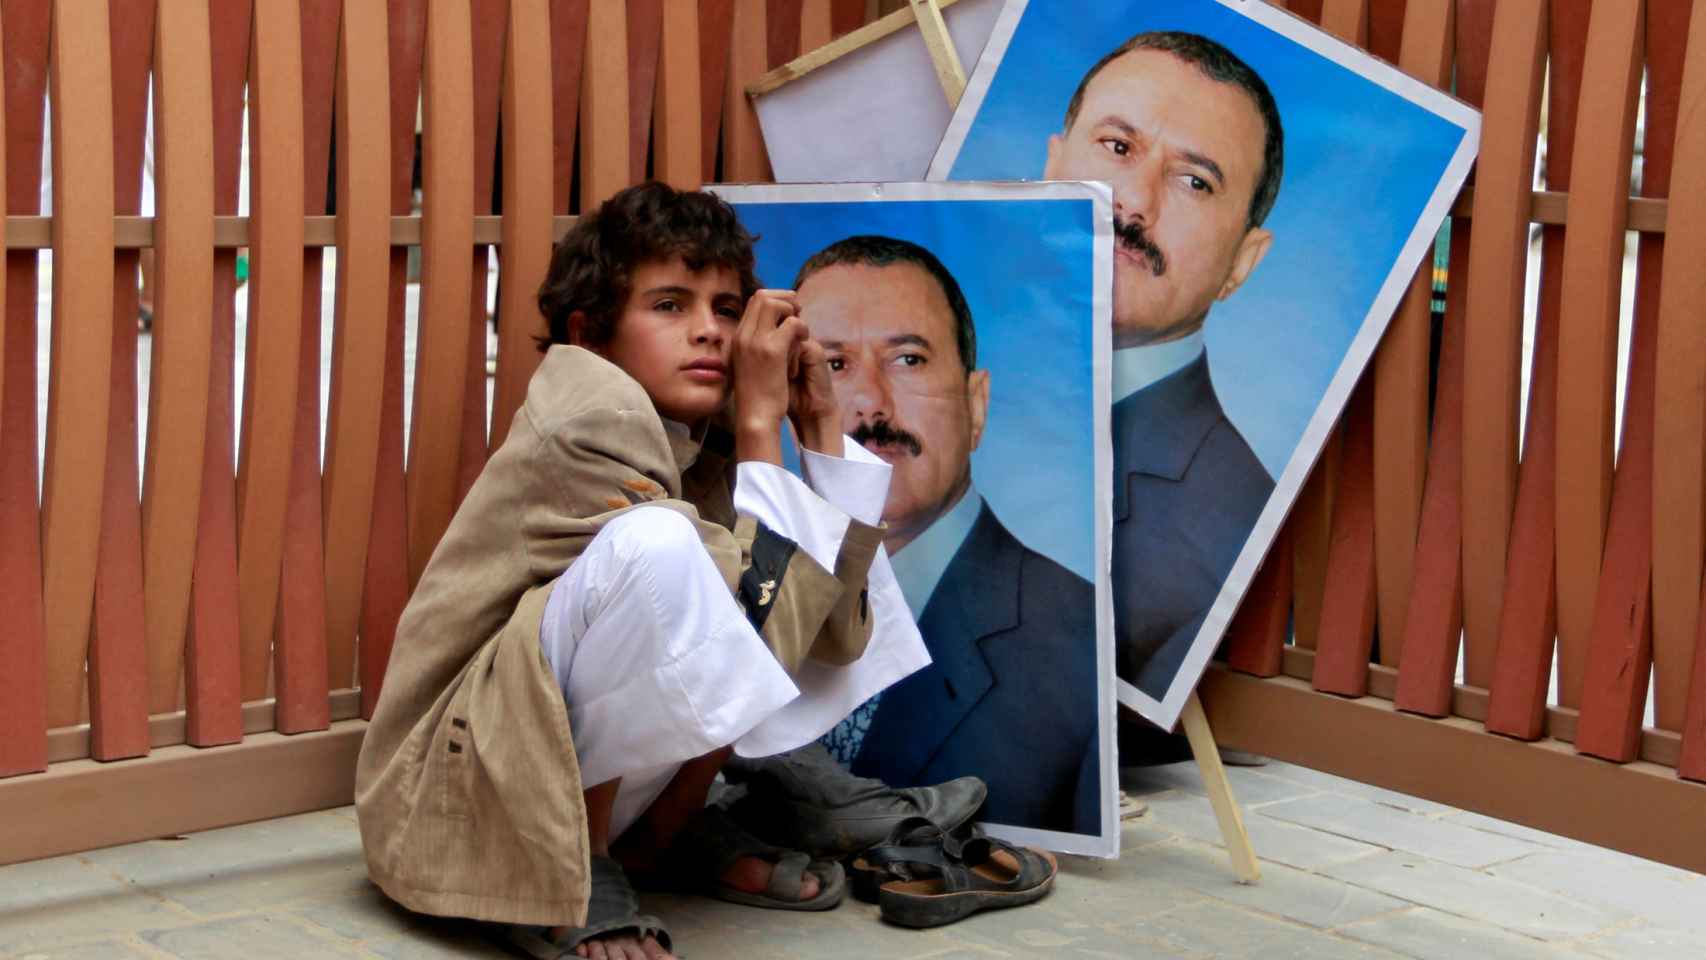 Un niño junto a retratos del expresidente yemení Ali Abdullah Saleh.